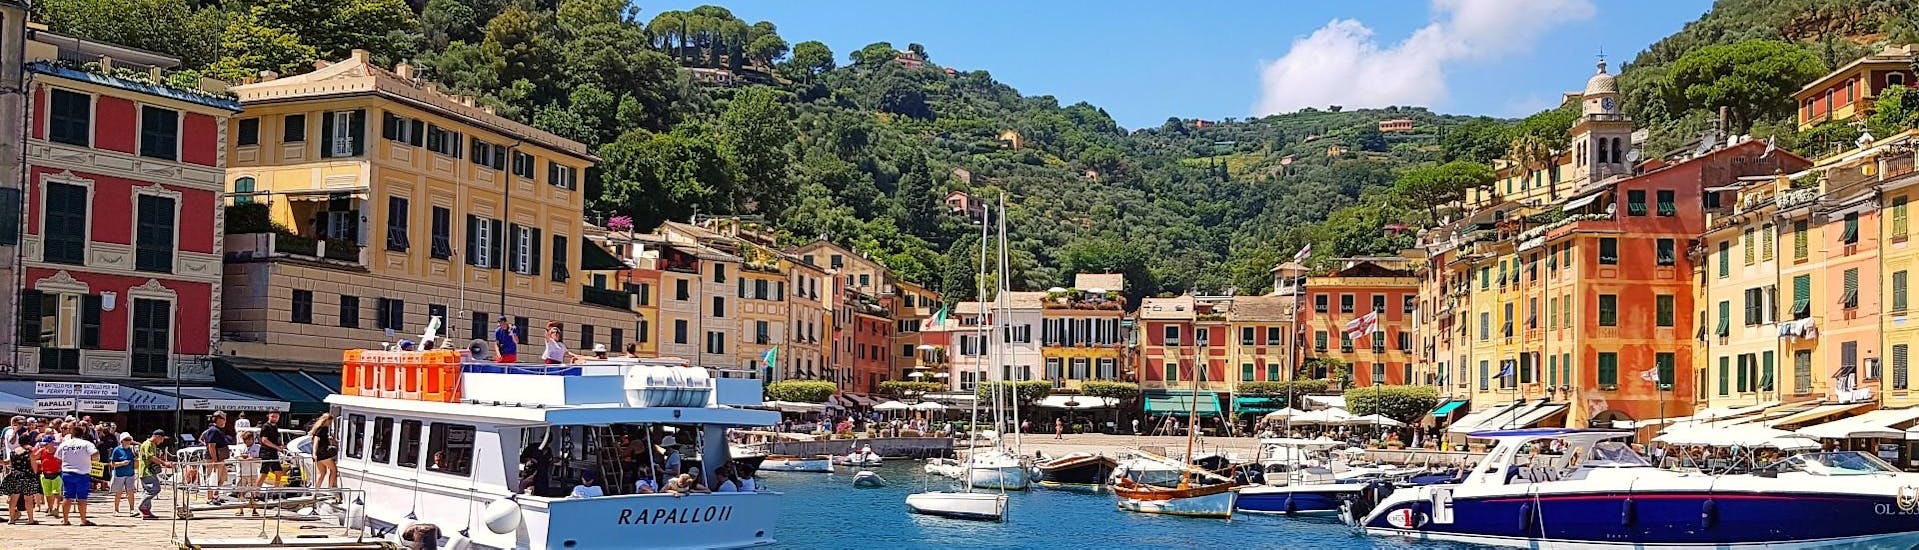 Jolie vue lors de la Balade privée en bateau à Portofino et San Fruttuoso depuis Levanto avec Costa di Faraggiana Levanto.